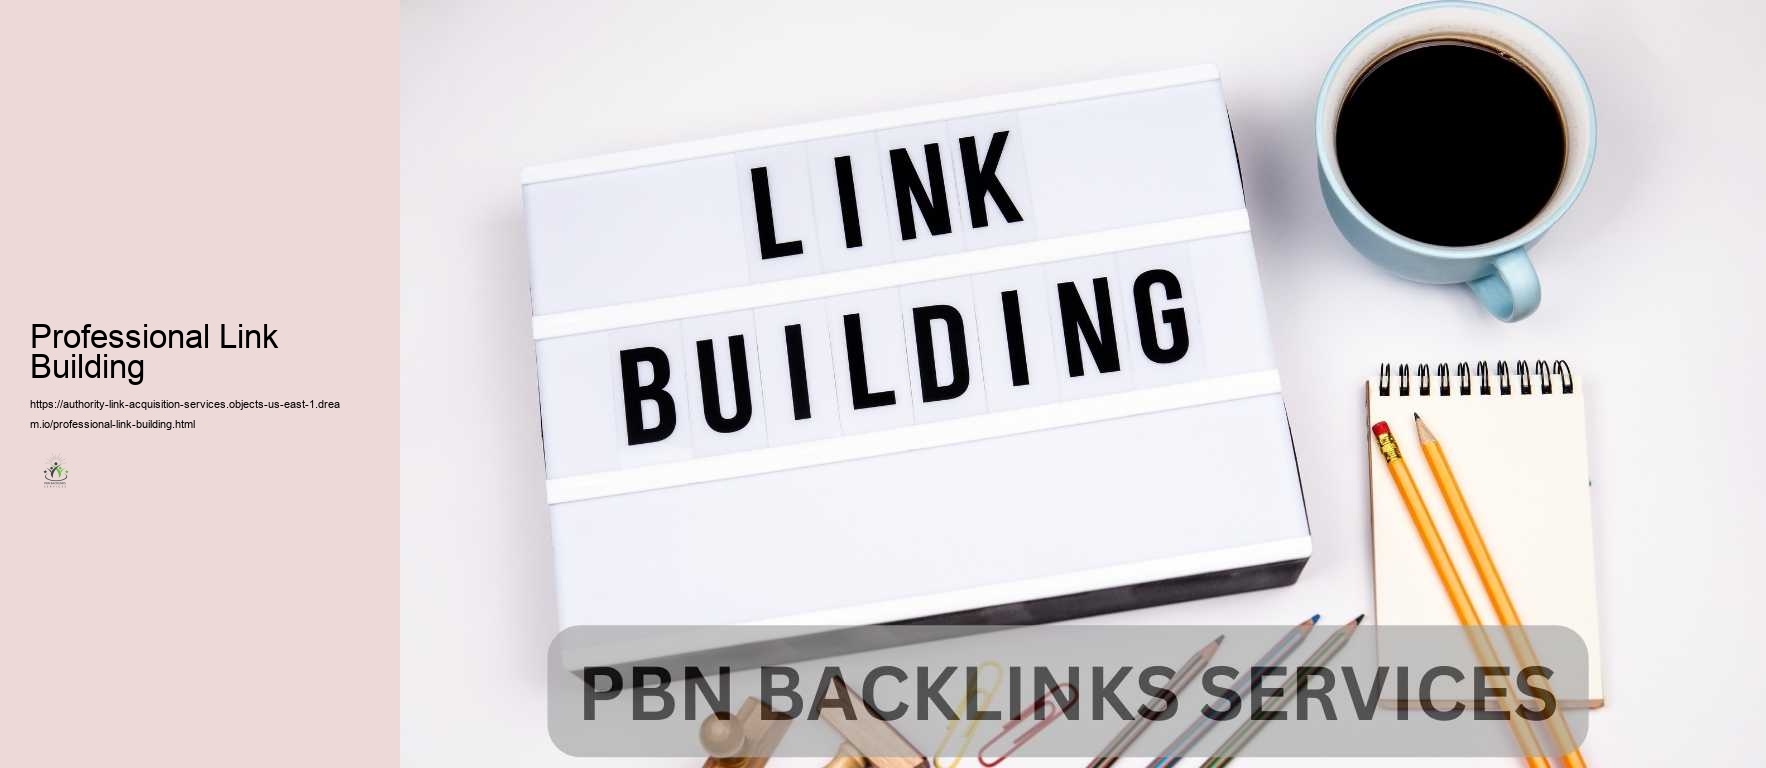 Professional Link Building